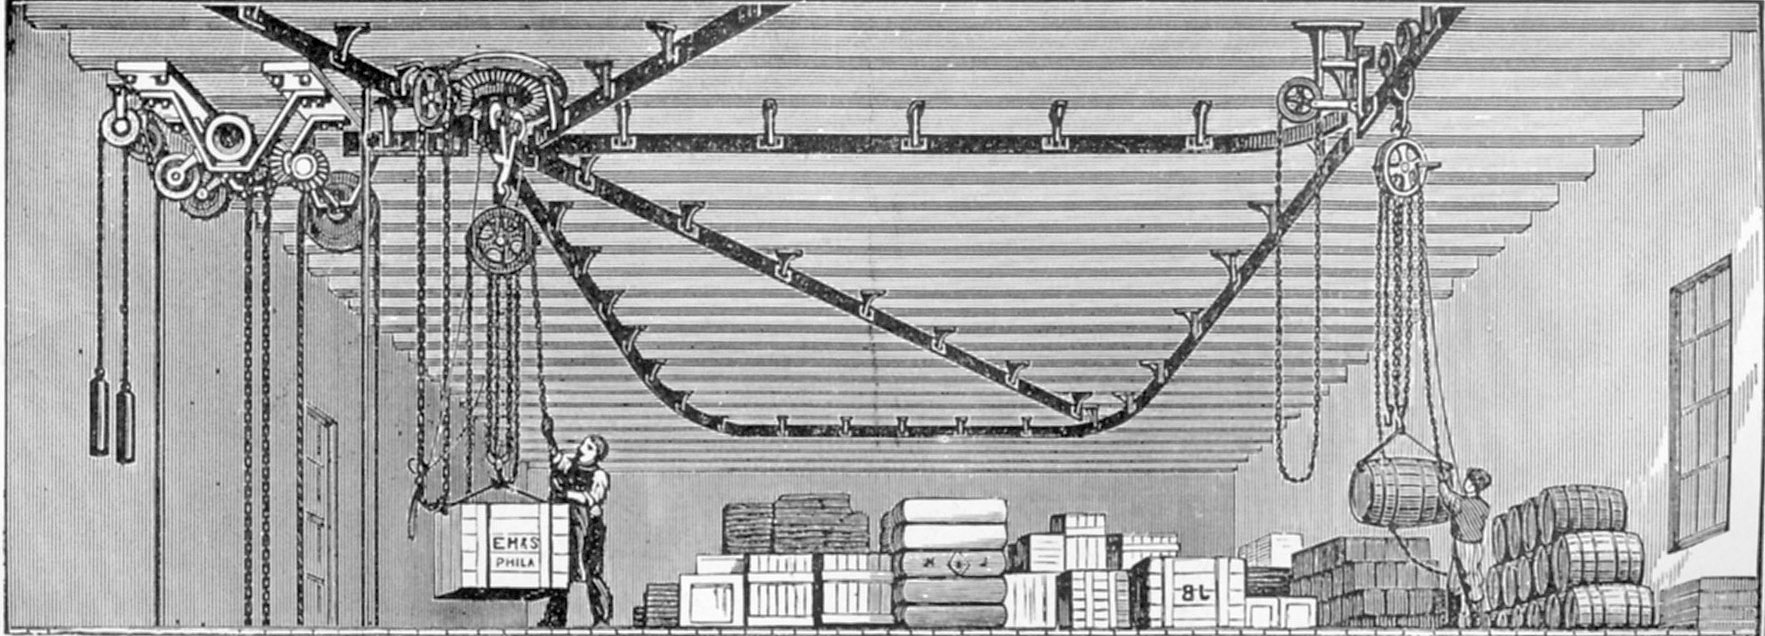 Edwin Harrington Overhead Track, Switch, Turn-Table, Hoist and Traveller, page 127